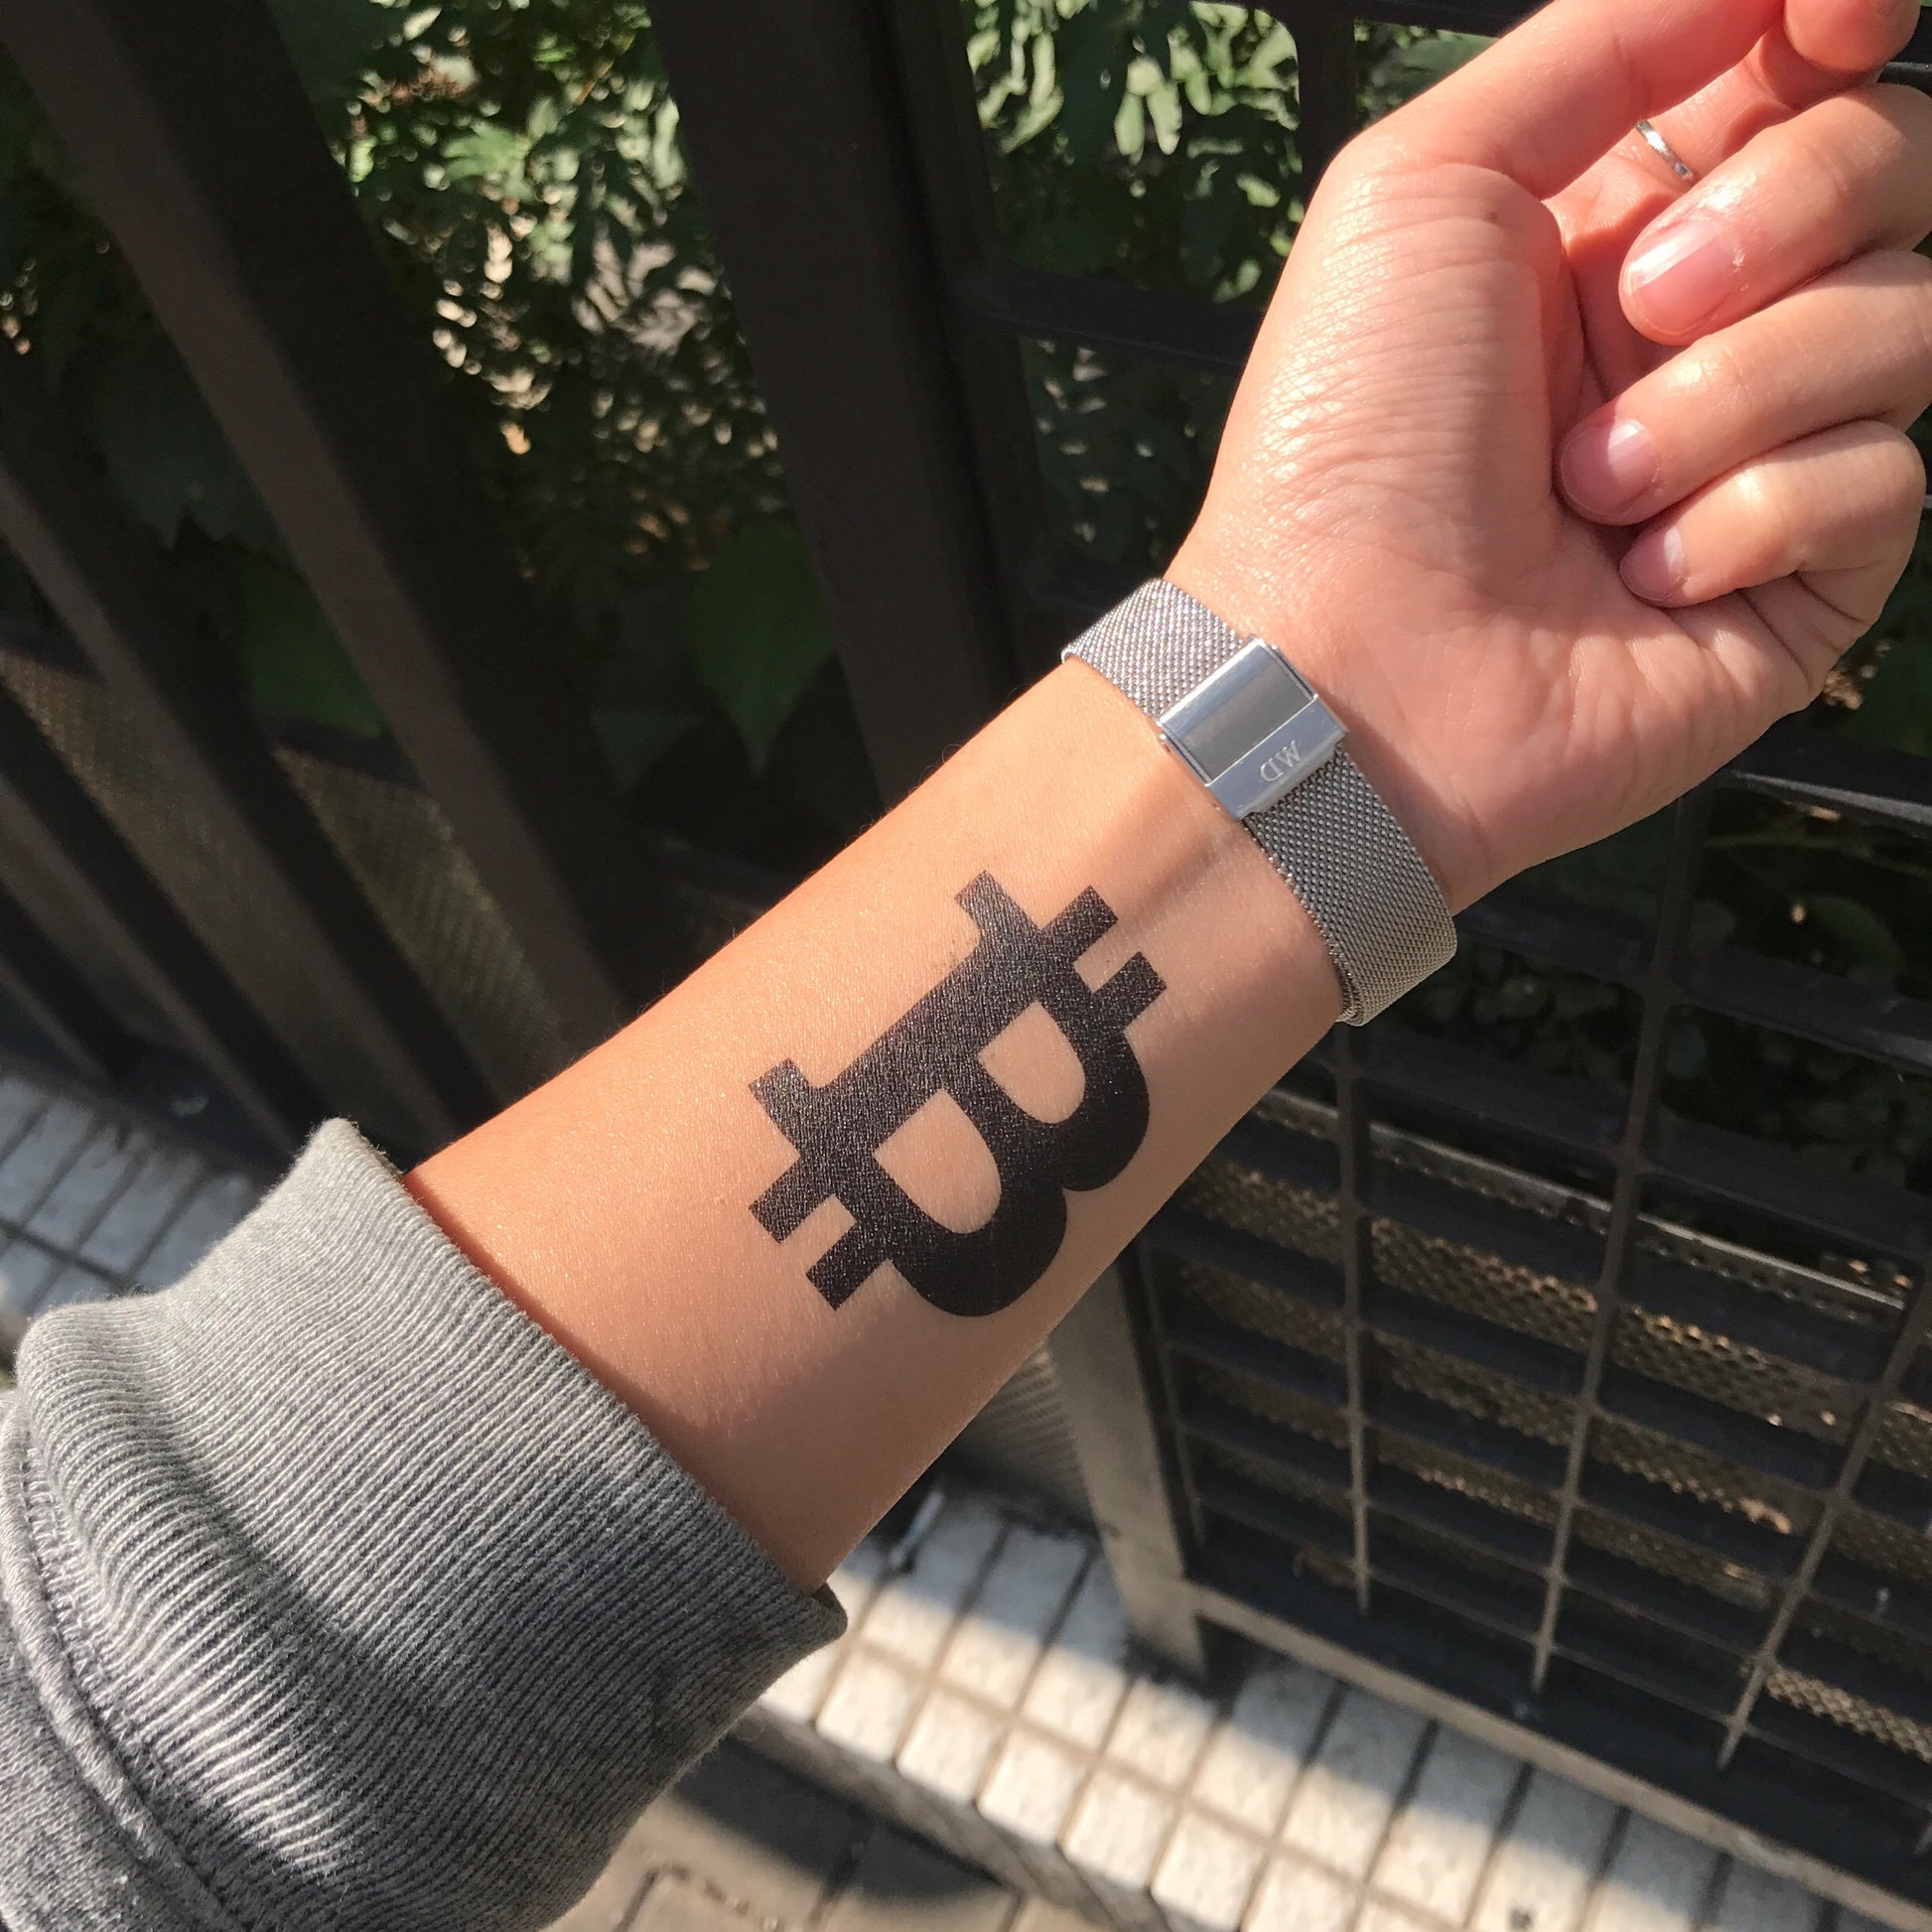 fake small bitcoin symbol minimalist temporary tattoo sticker design idea on wrist